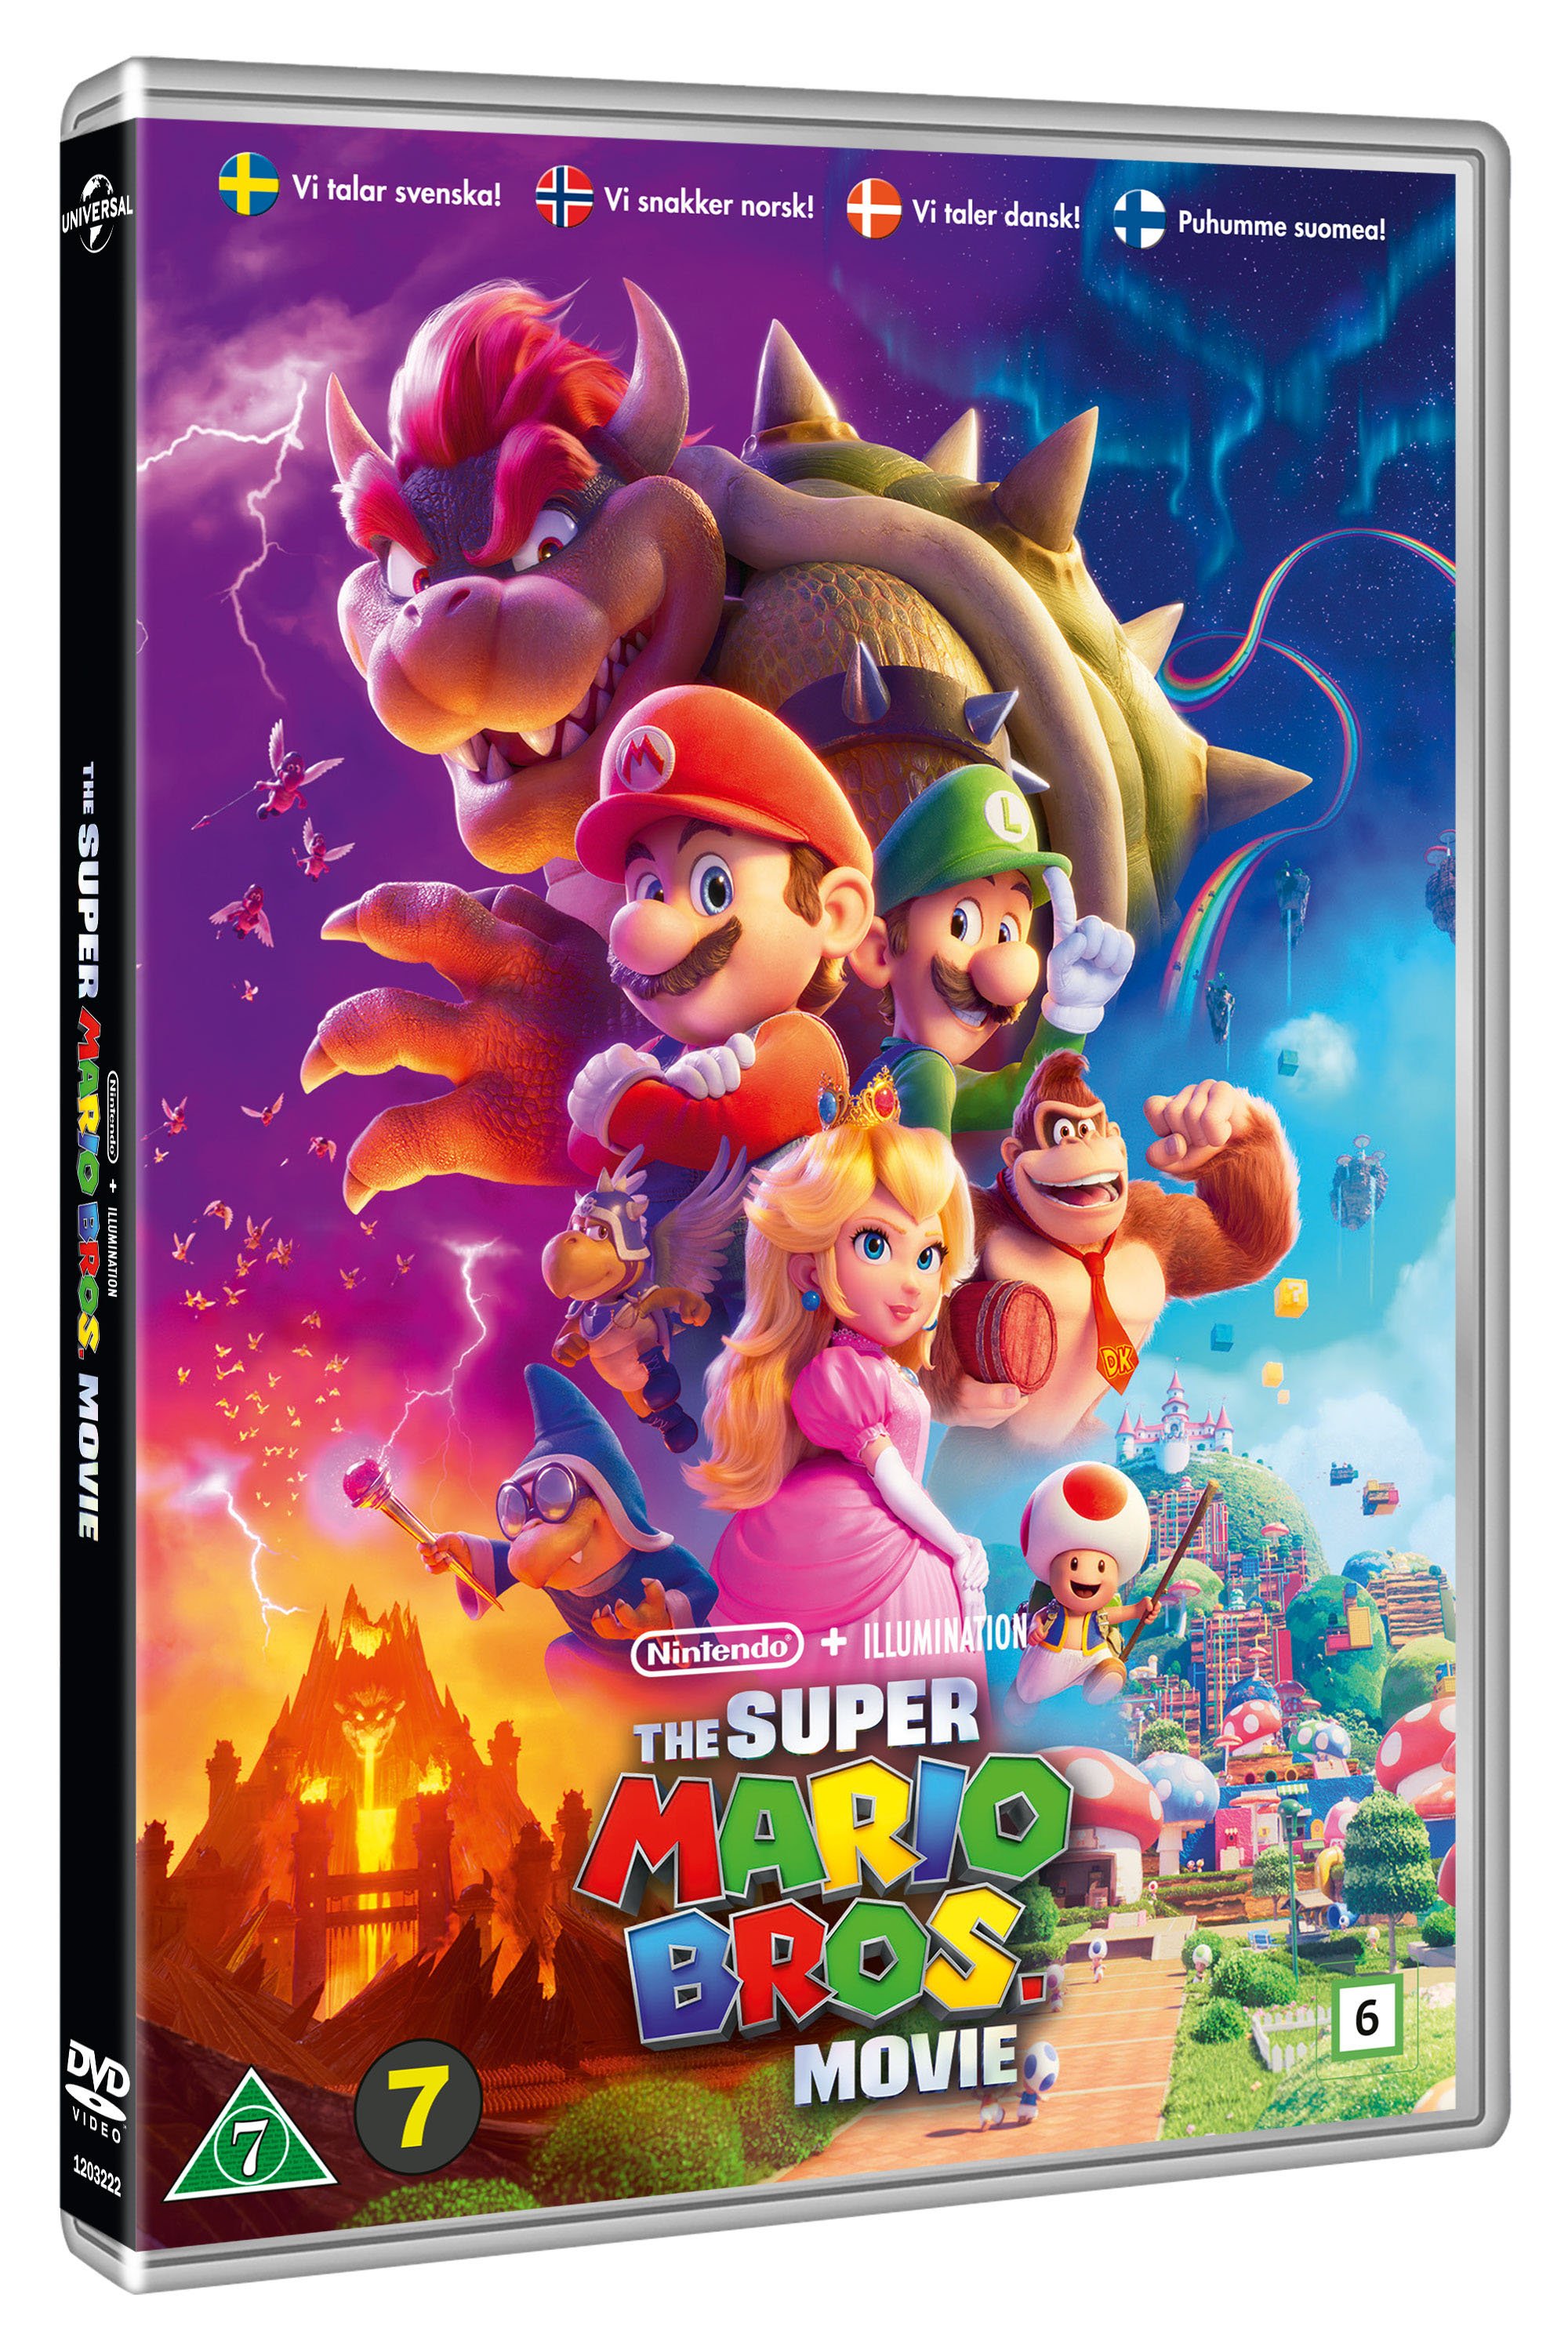 Köp The Super Mario Bros. Movie - DVD - Standard